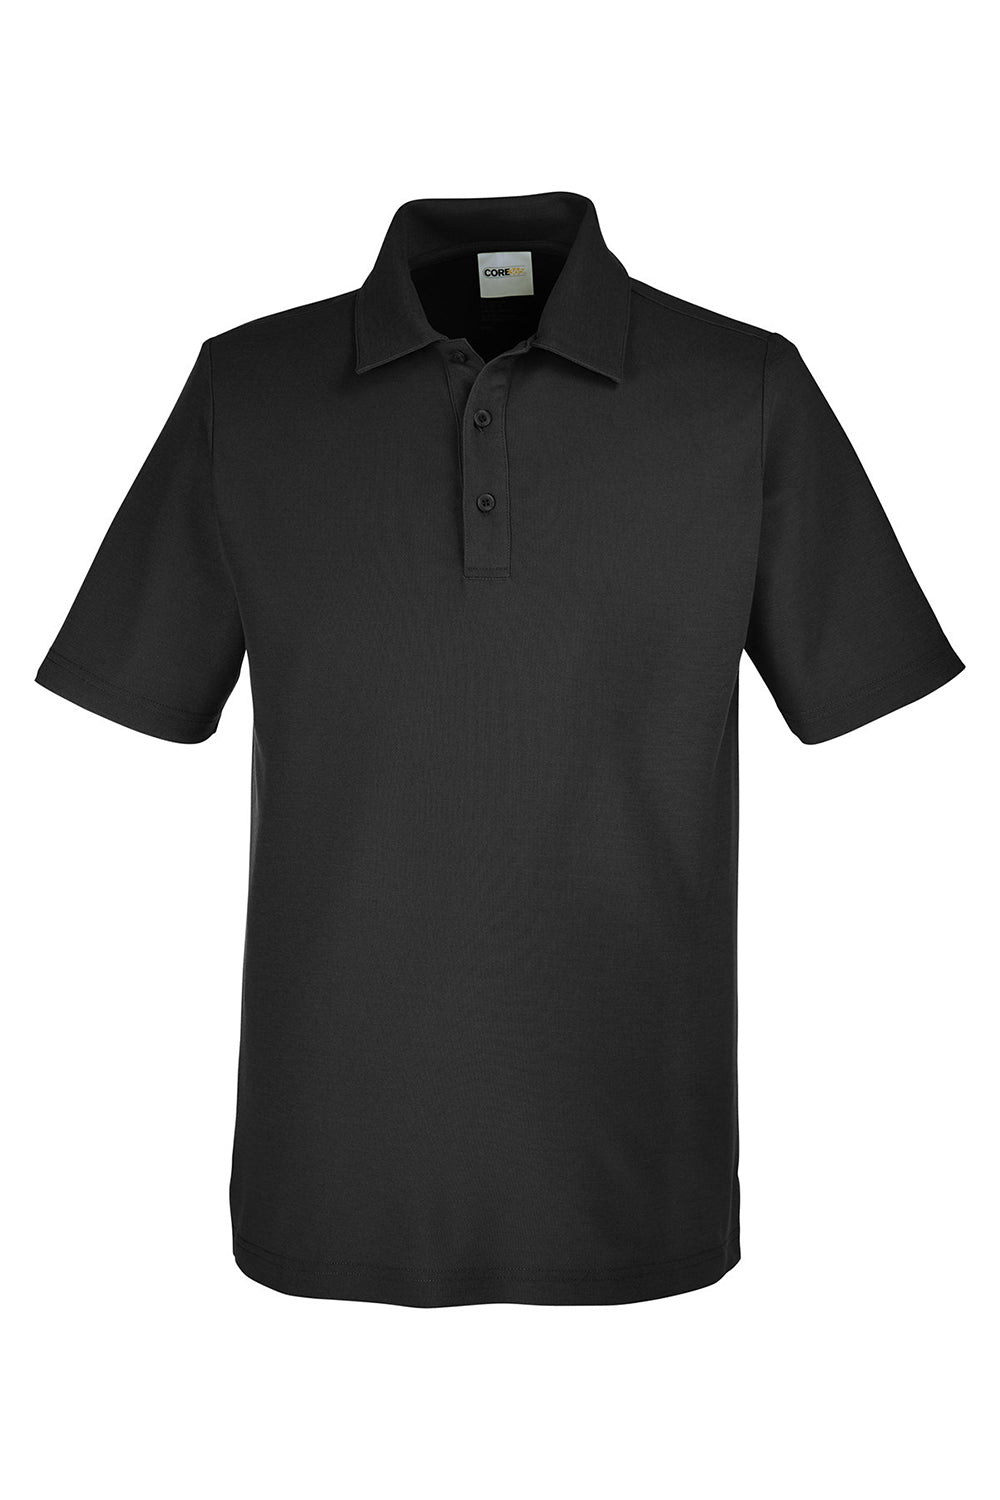 Core 365 CE112 Mens Fusion ChromaSoft Performance Moisture Wicking Short Sleeve Polo Shirt Black Flat Front